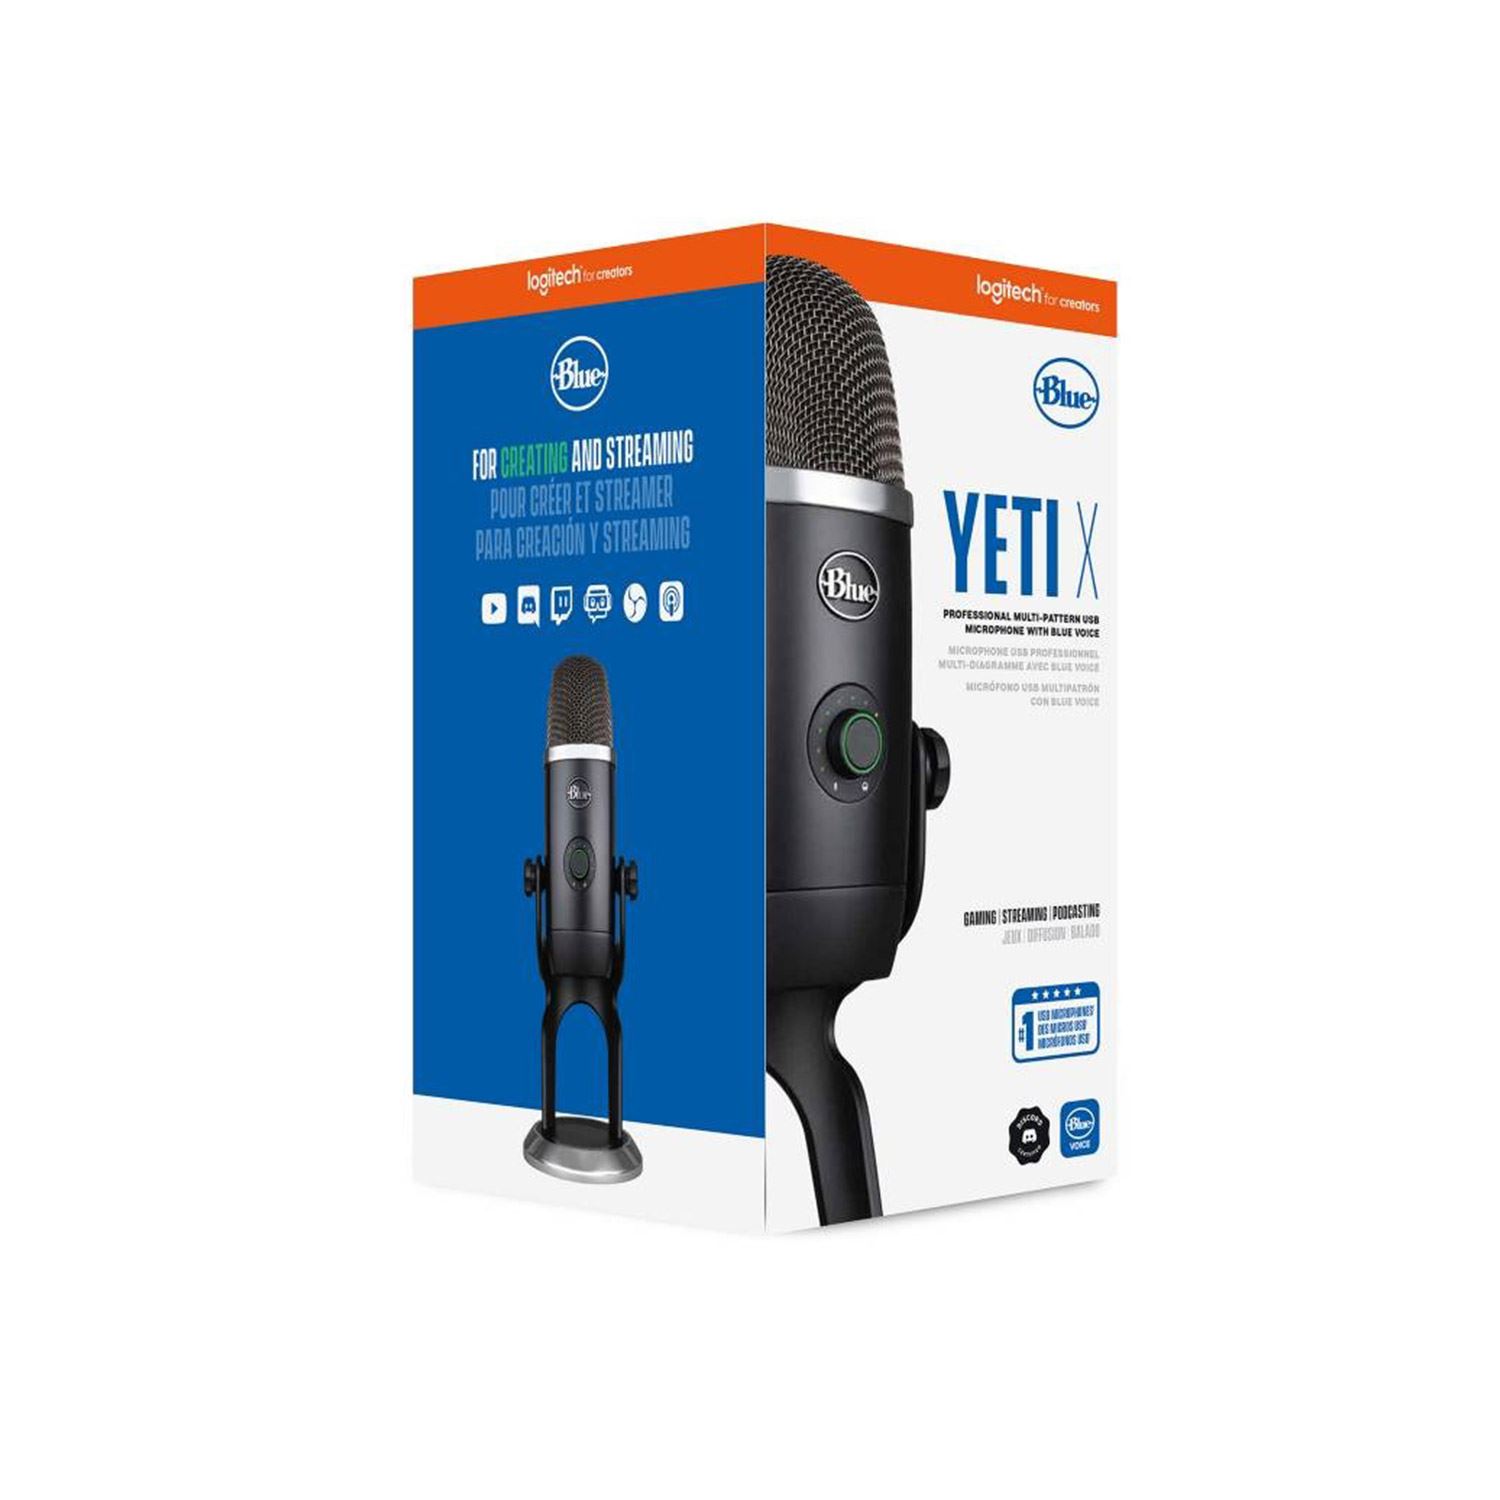 Micrófono USB multipatrón profesional Logitech Blue Yeti para grabación y  streaming